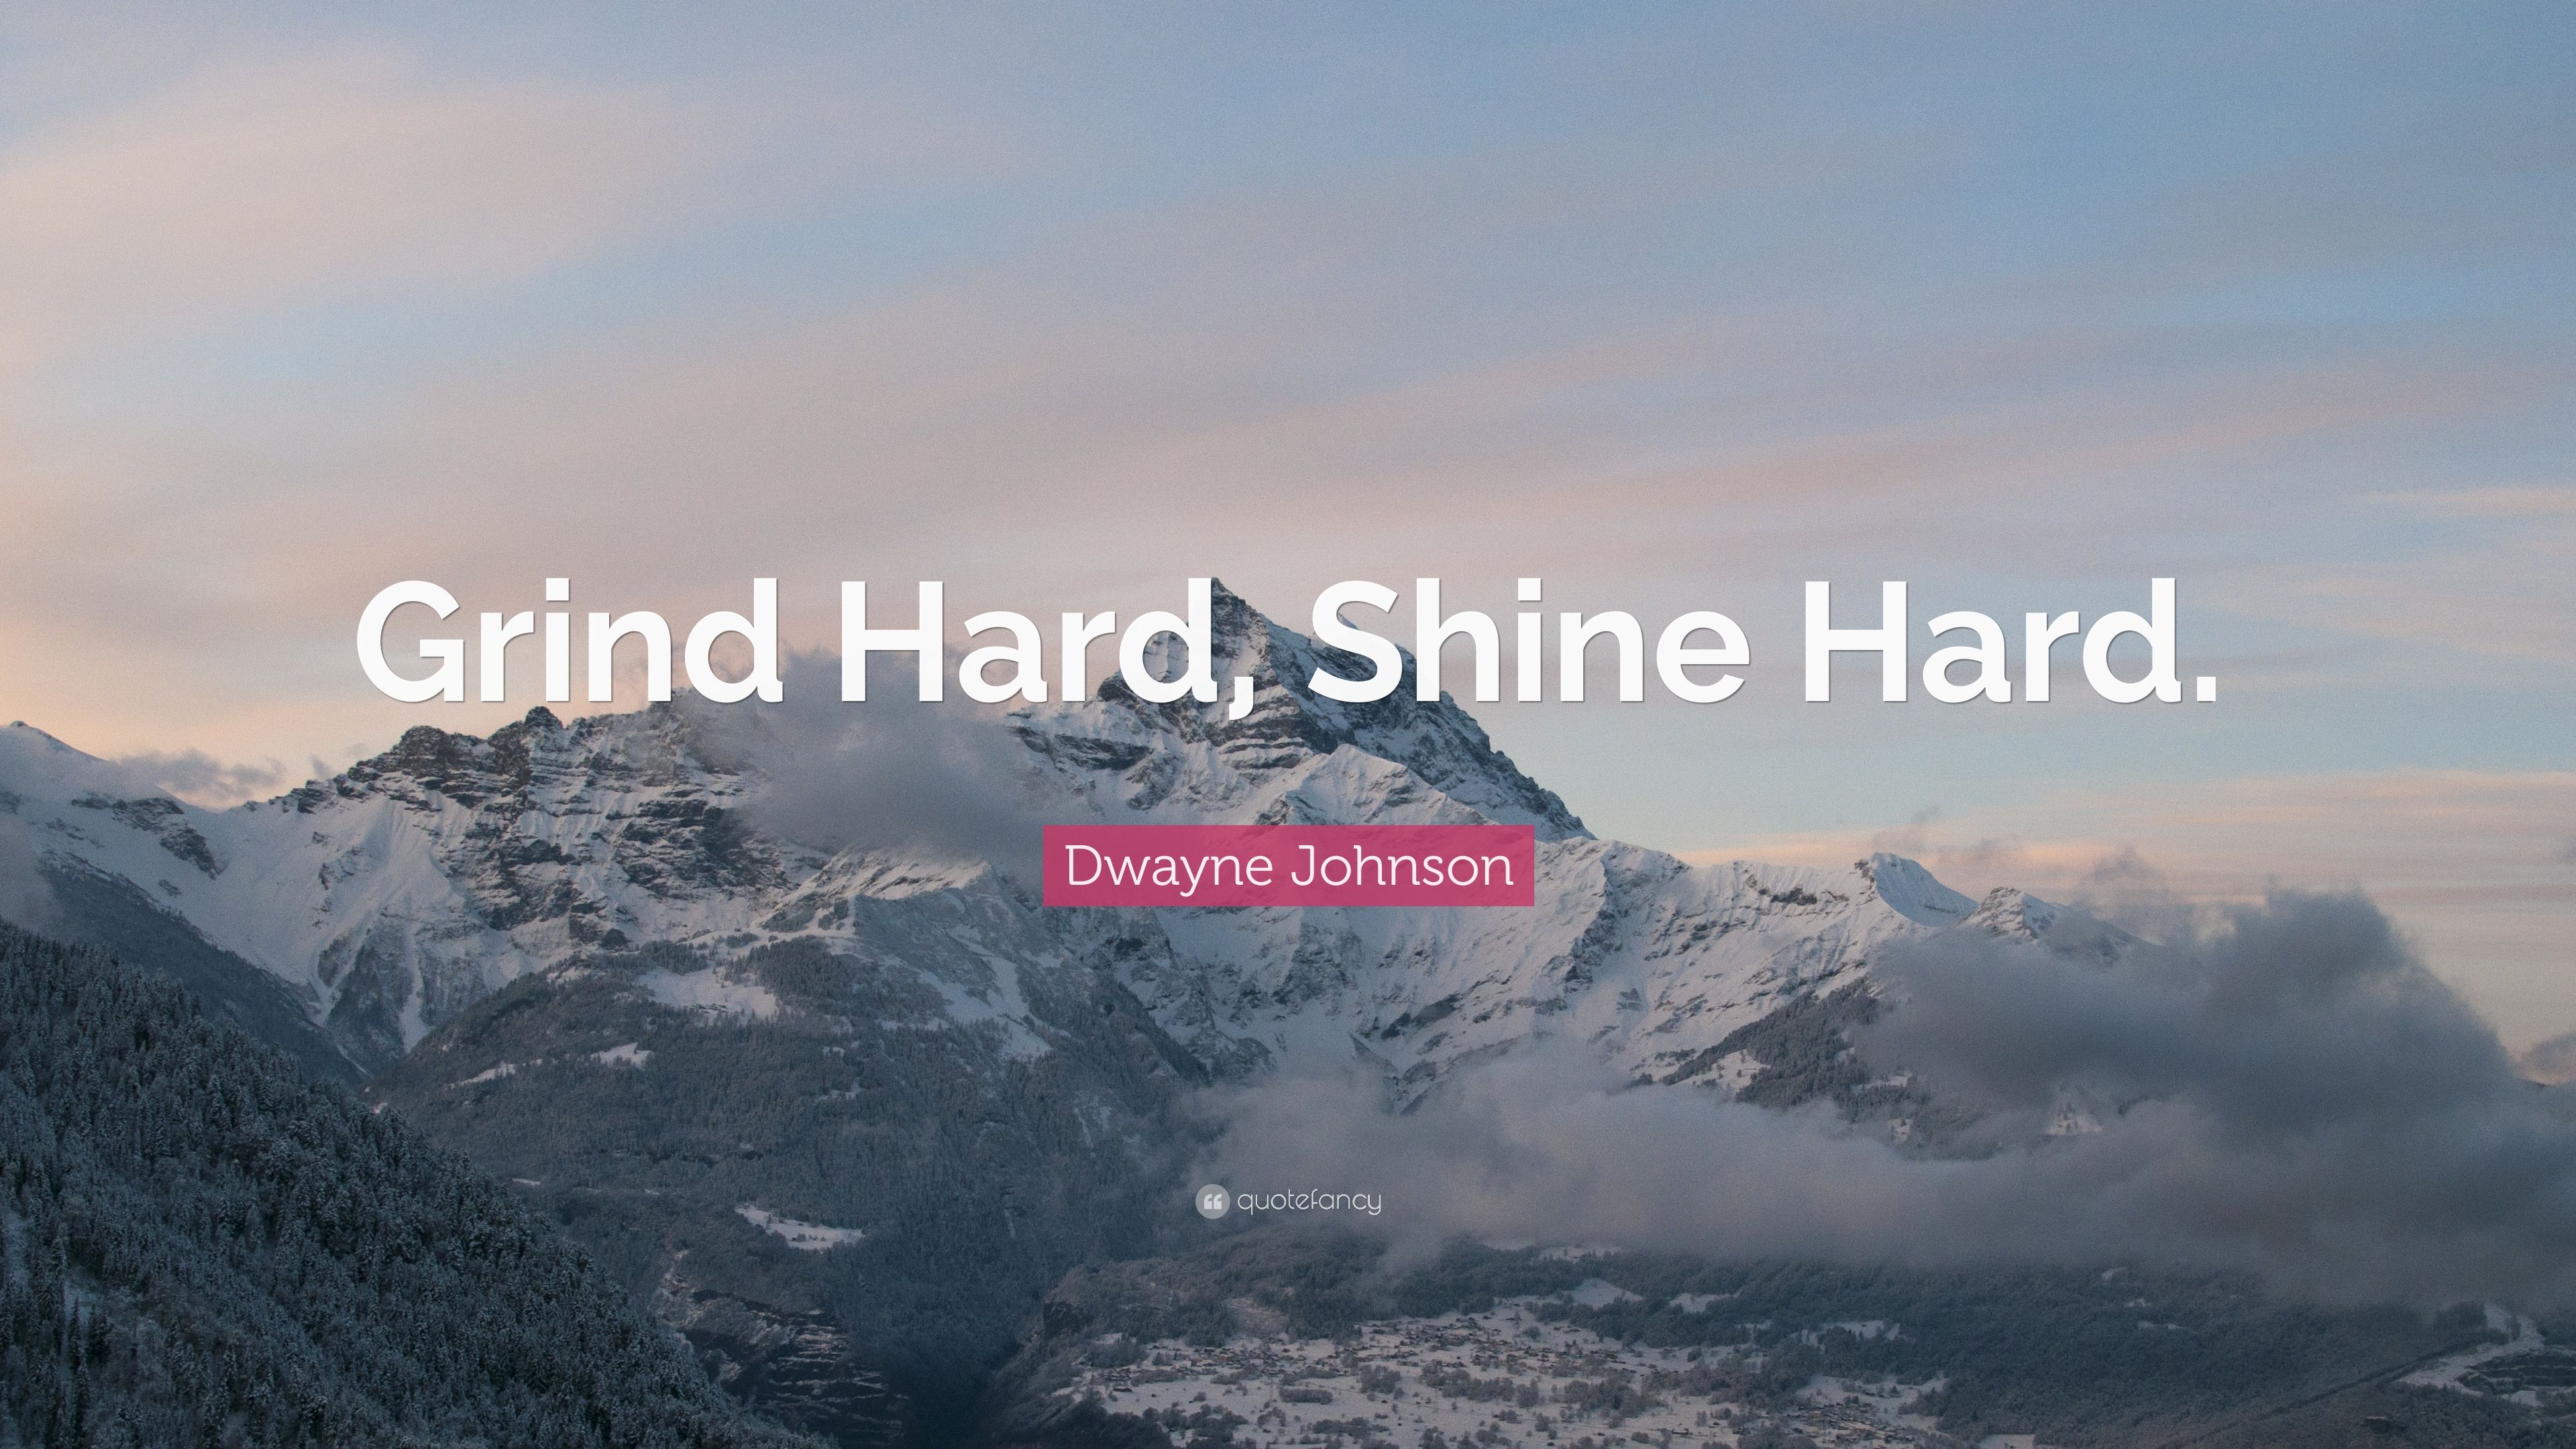 Dwayne Johnson Quote: “Grind Hard, Shine Hard.” 12 wallpaper